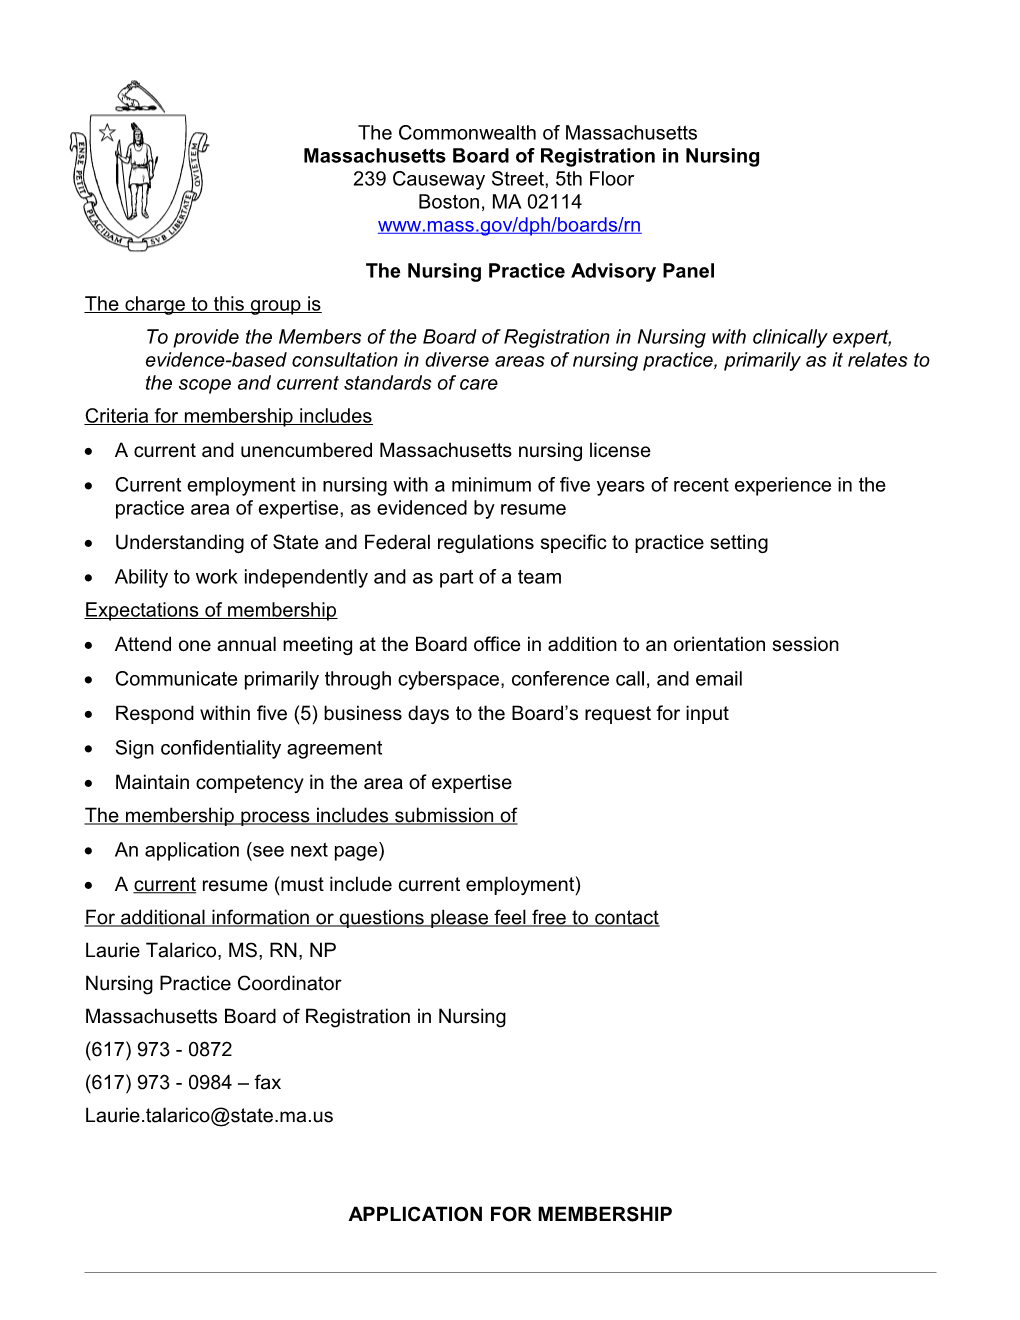 Massachusetts Board of Registration in Nursing